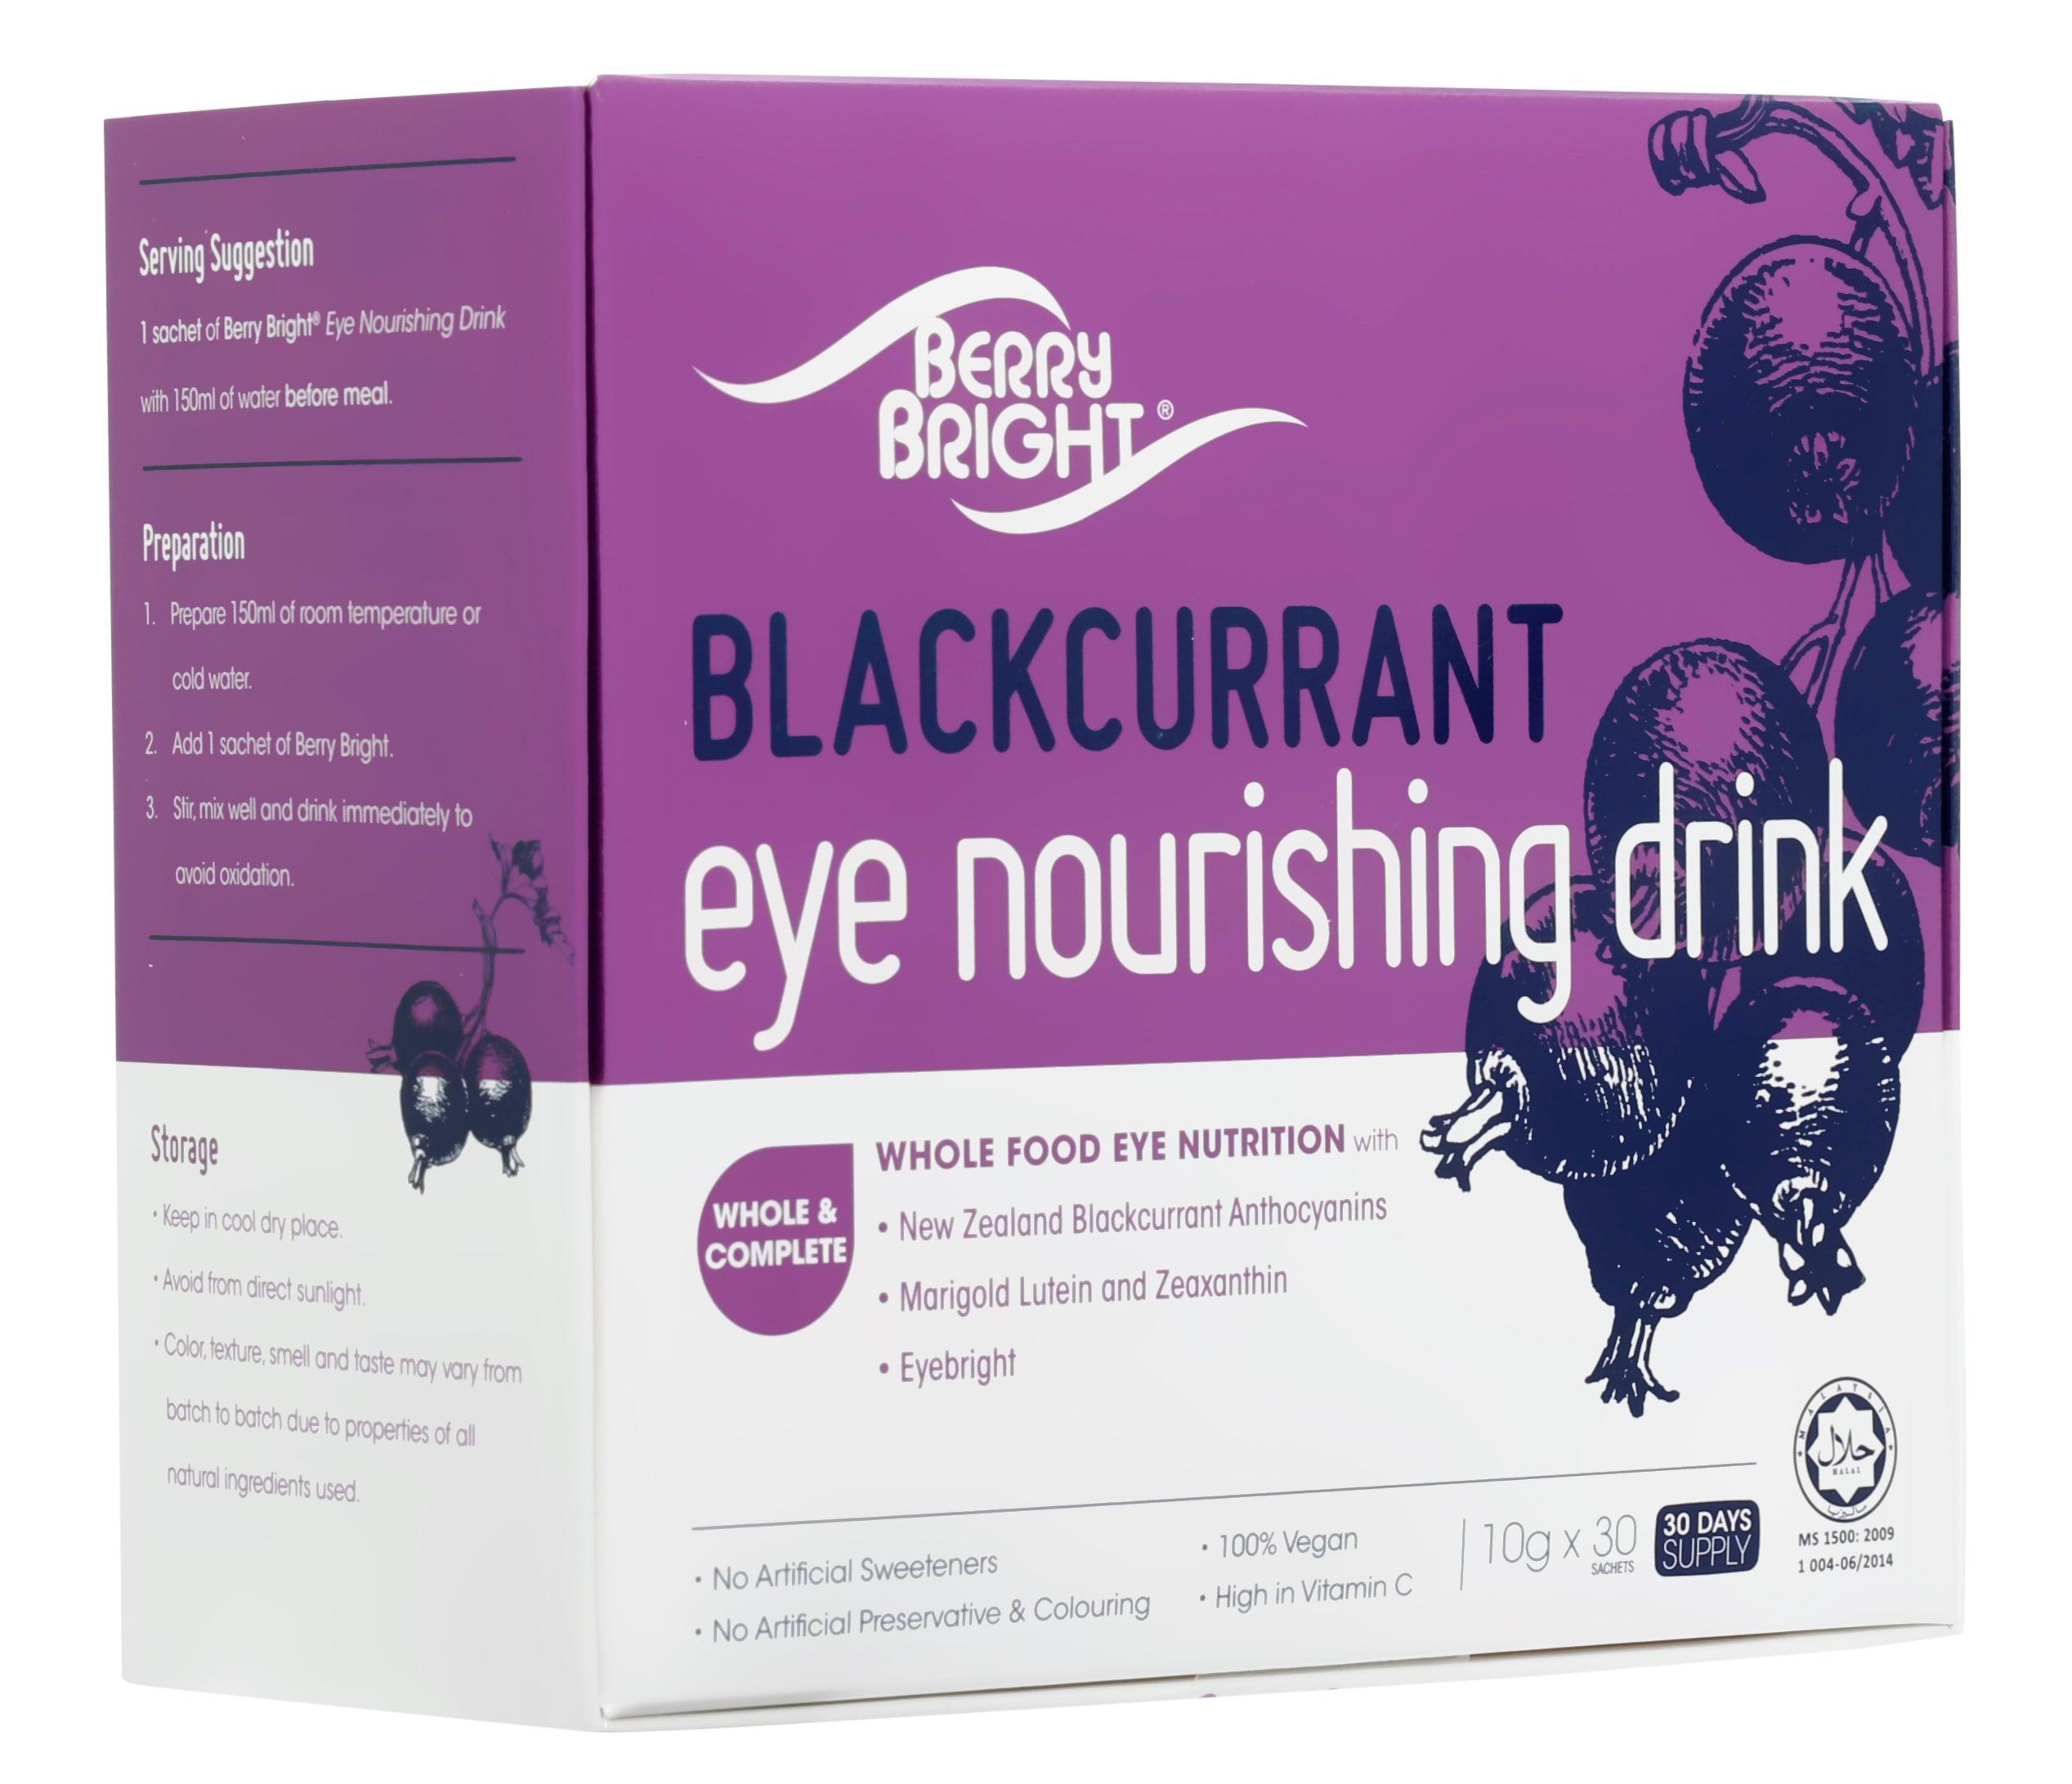 Blackcurrant Eye Nourishing drink